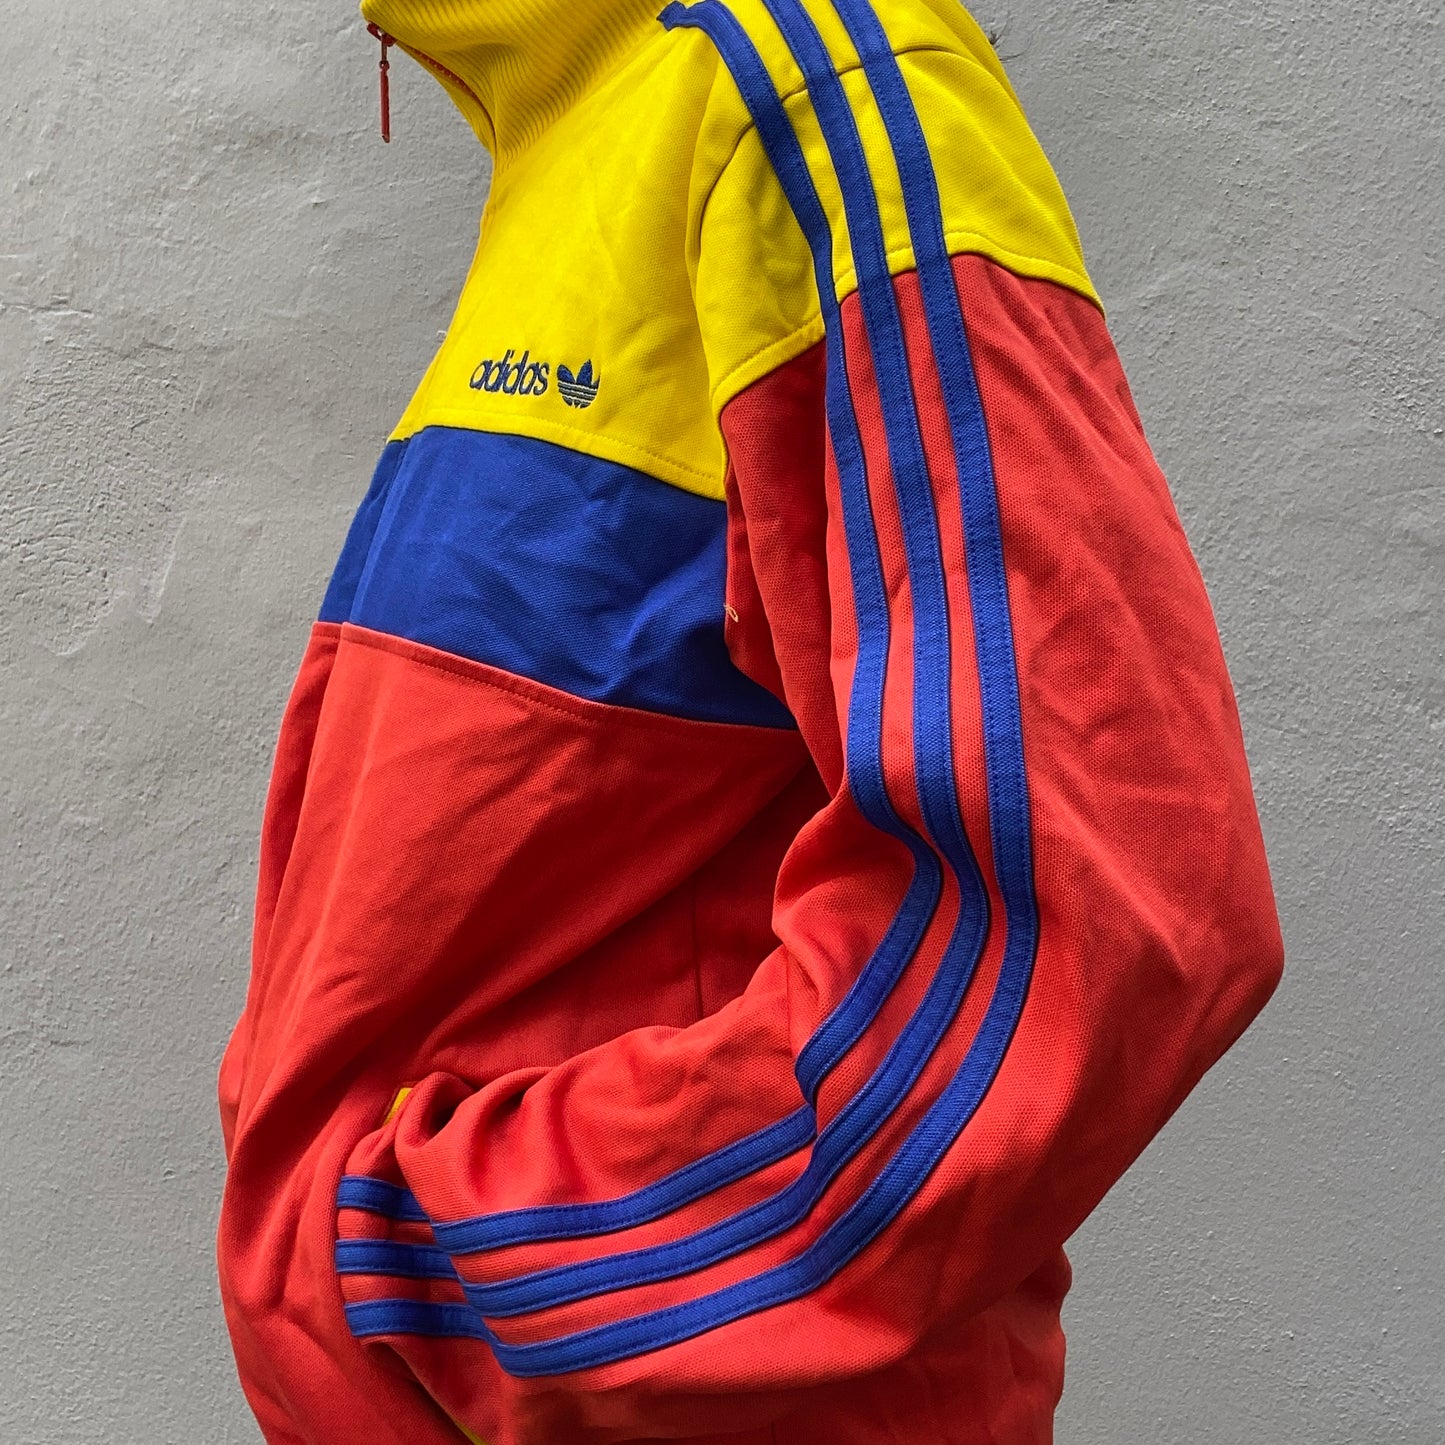 Ecuador Adidas Track Suit side